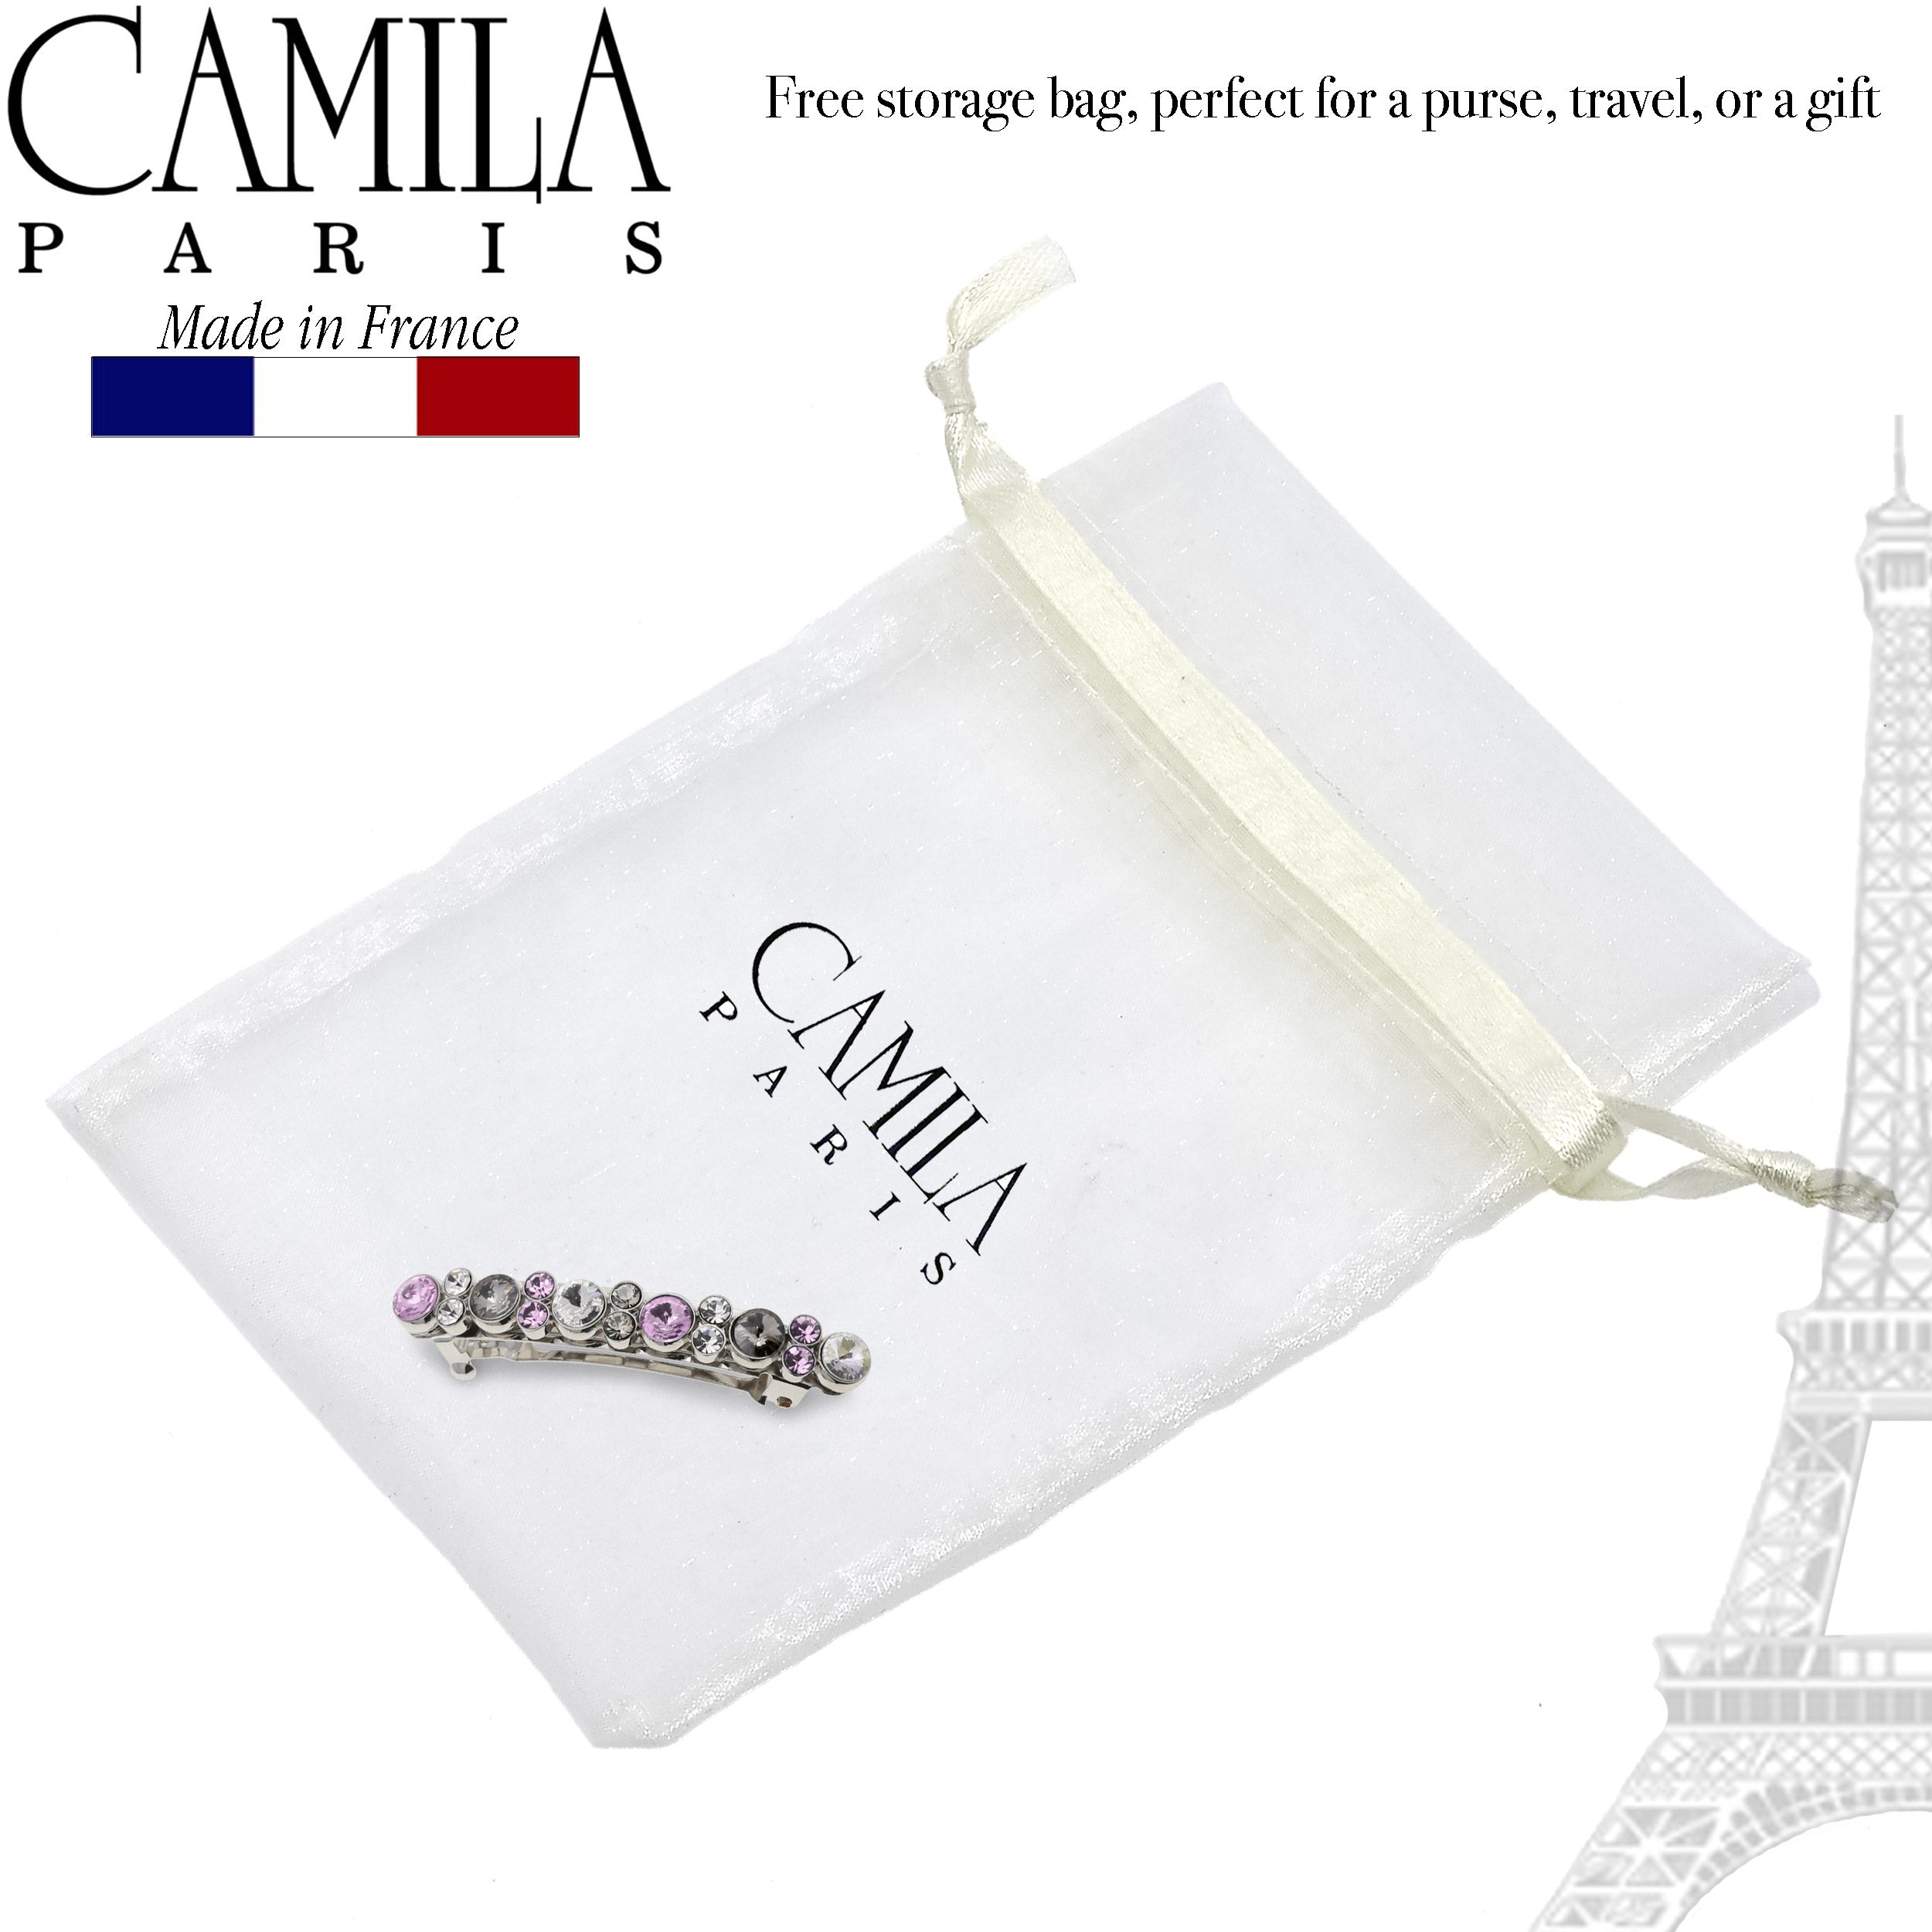 Camila Paris Small Silver Hair Barrette Clip with Swarovski Crystals